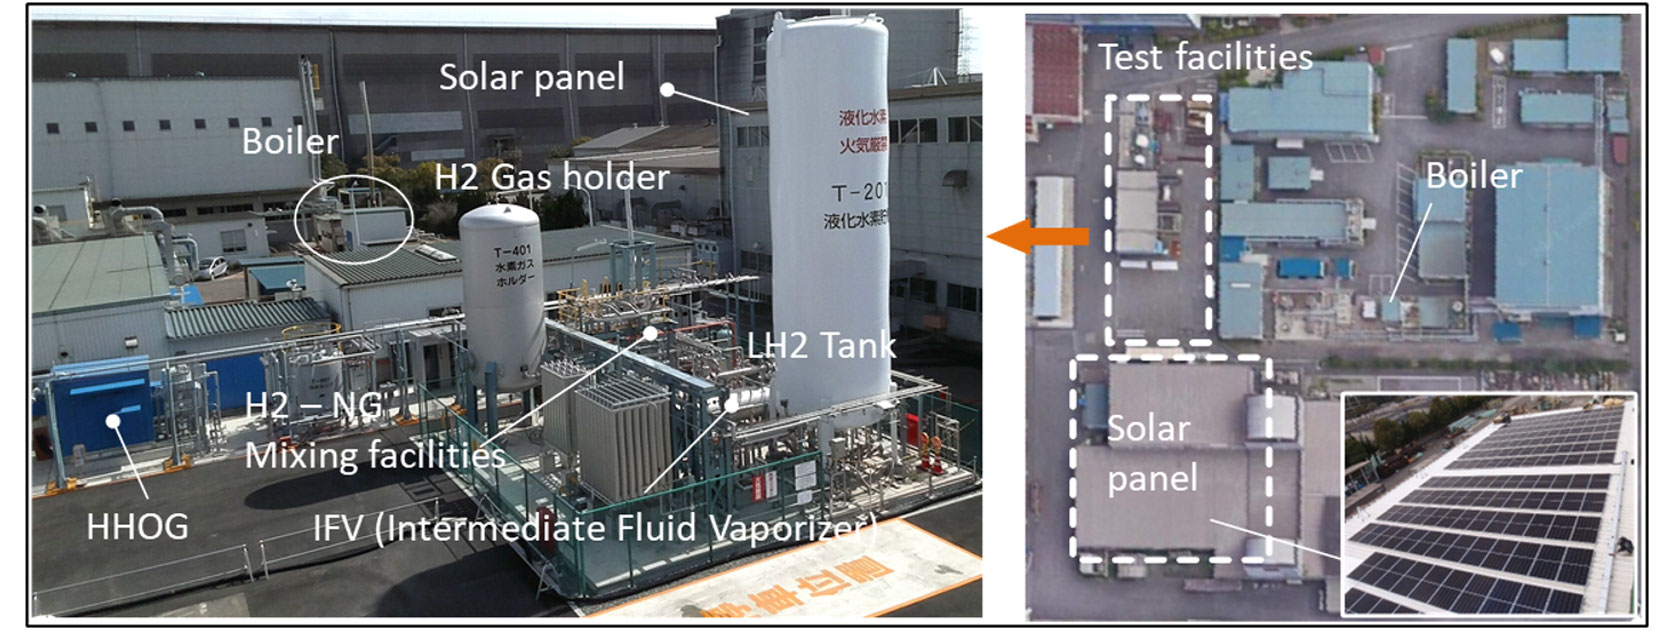 Hybrid-type hydrogen gas supply system test facilities